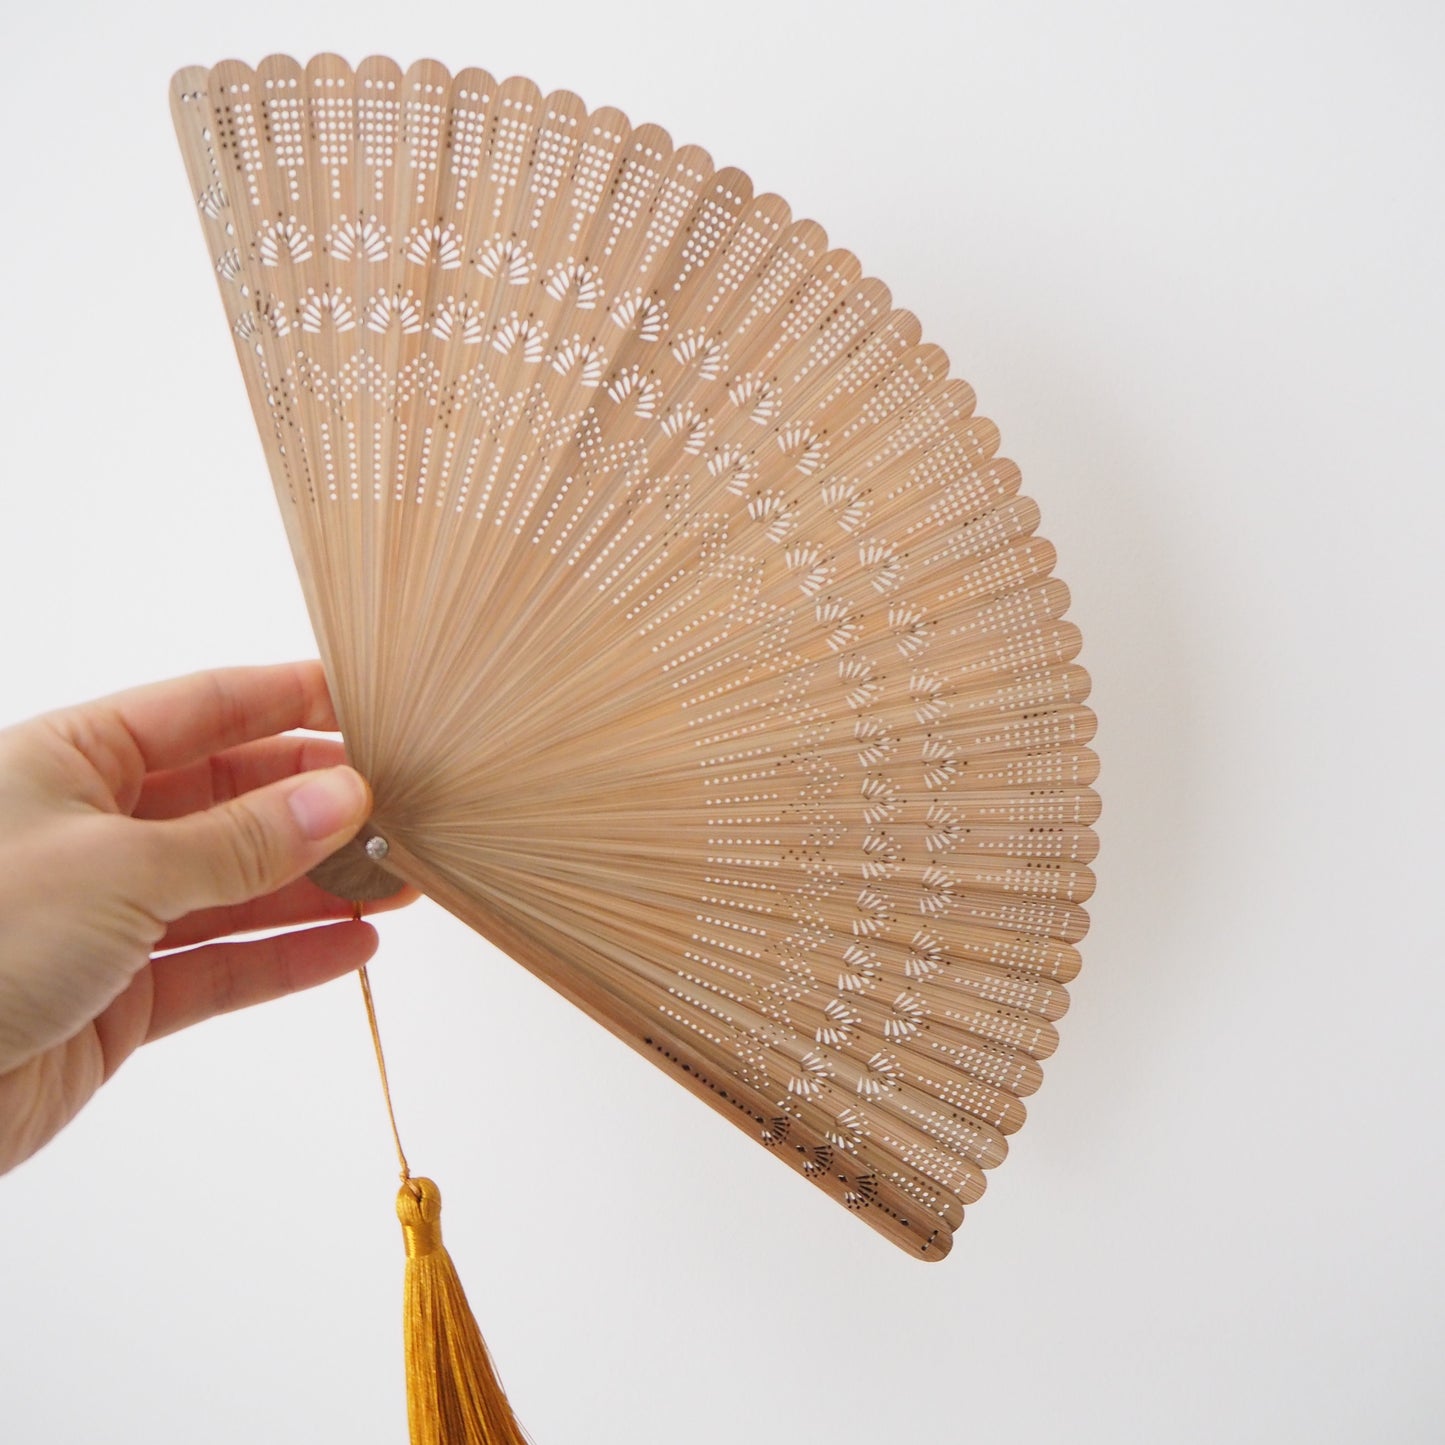 Wooden Folding Fan - Palm, natural